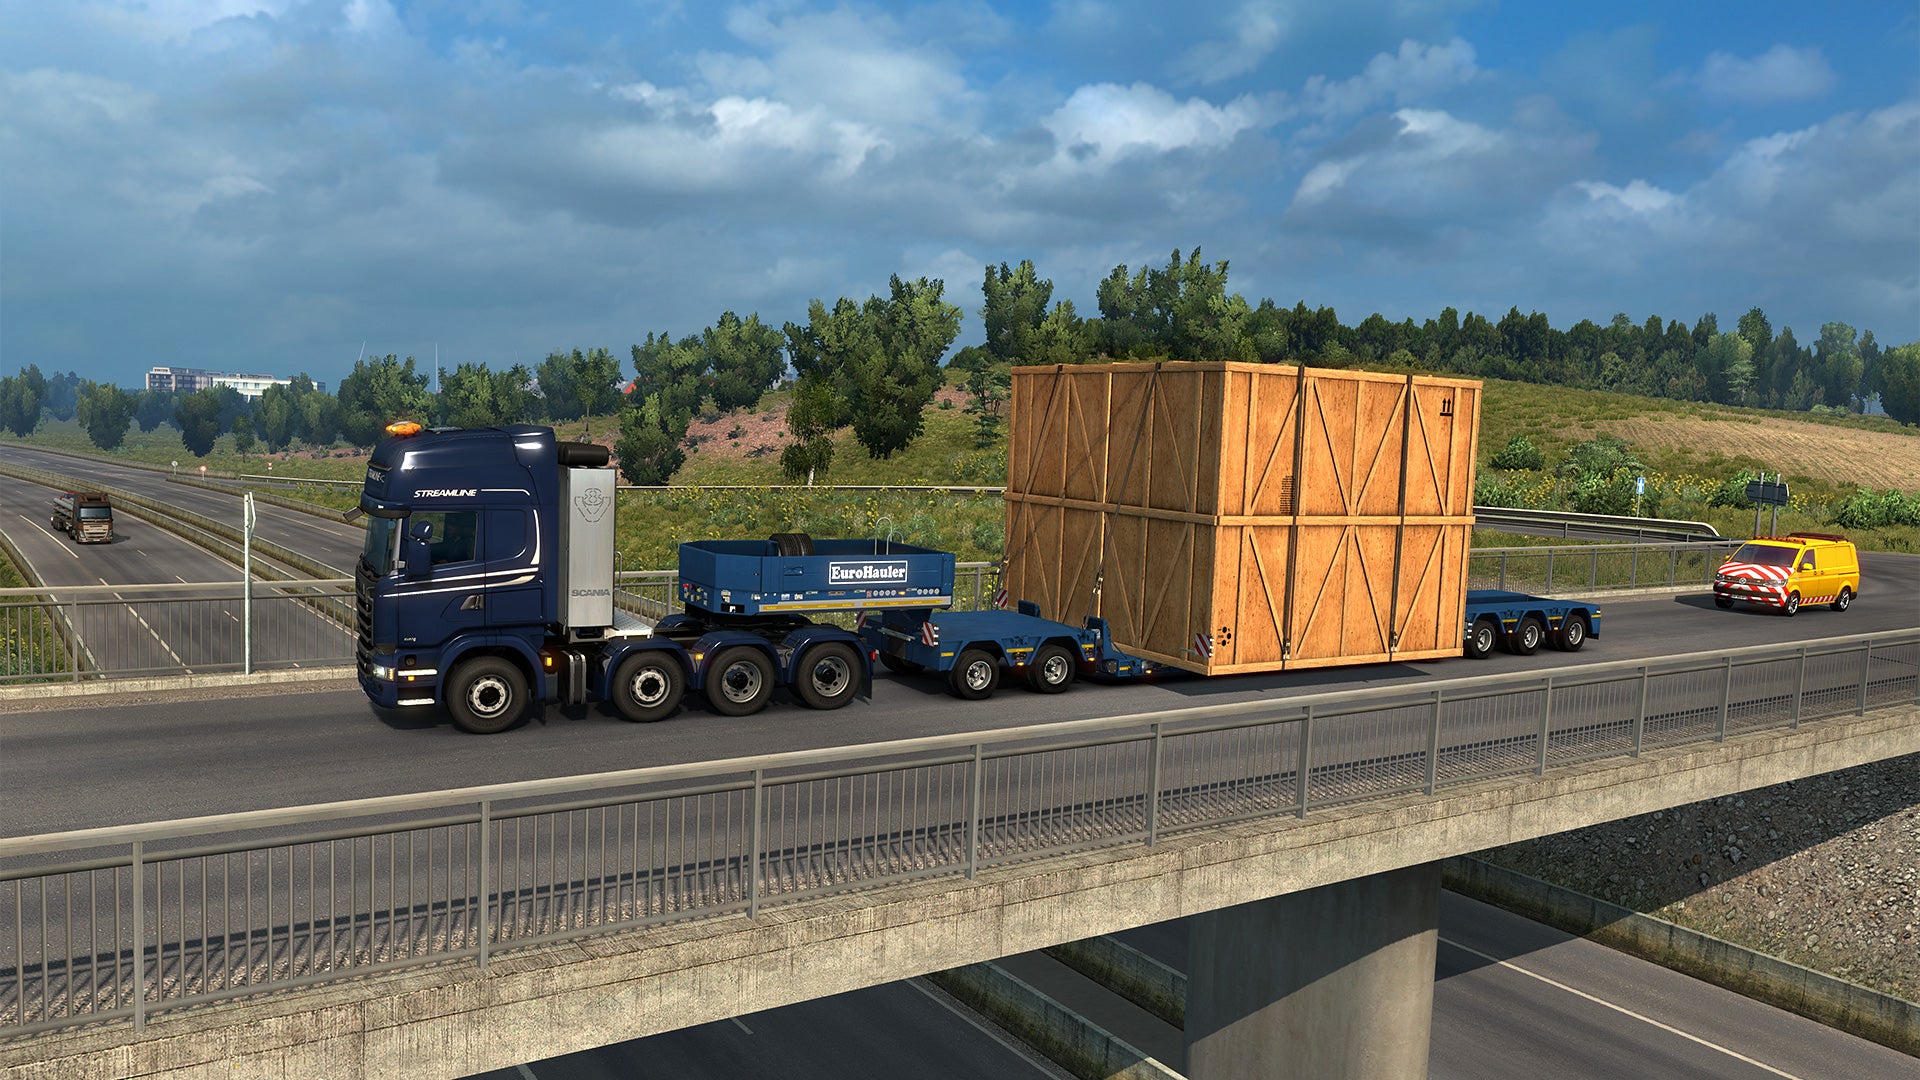 Euro Truck Simulator 2 Cargo Collection